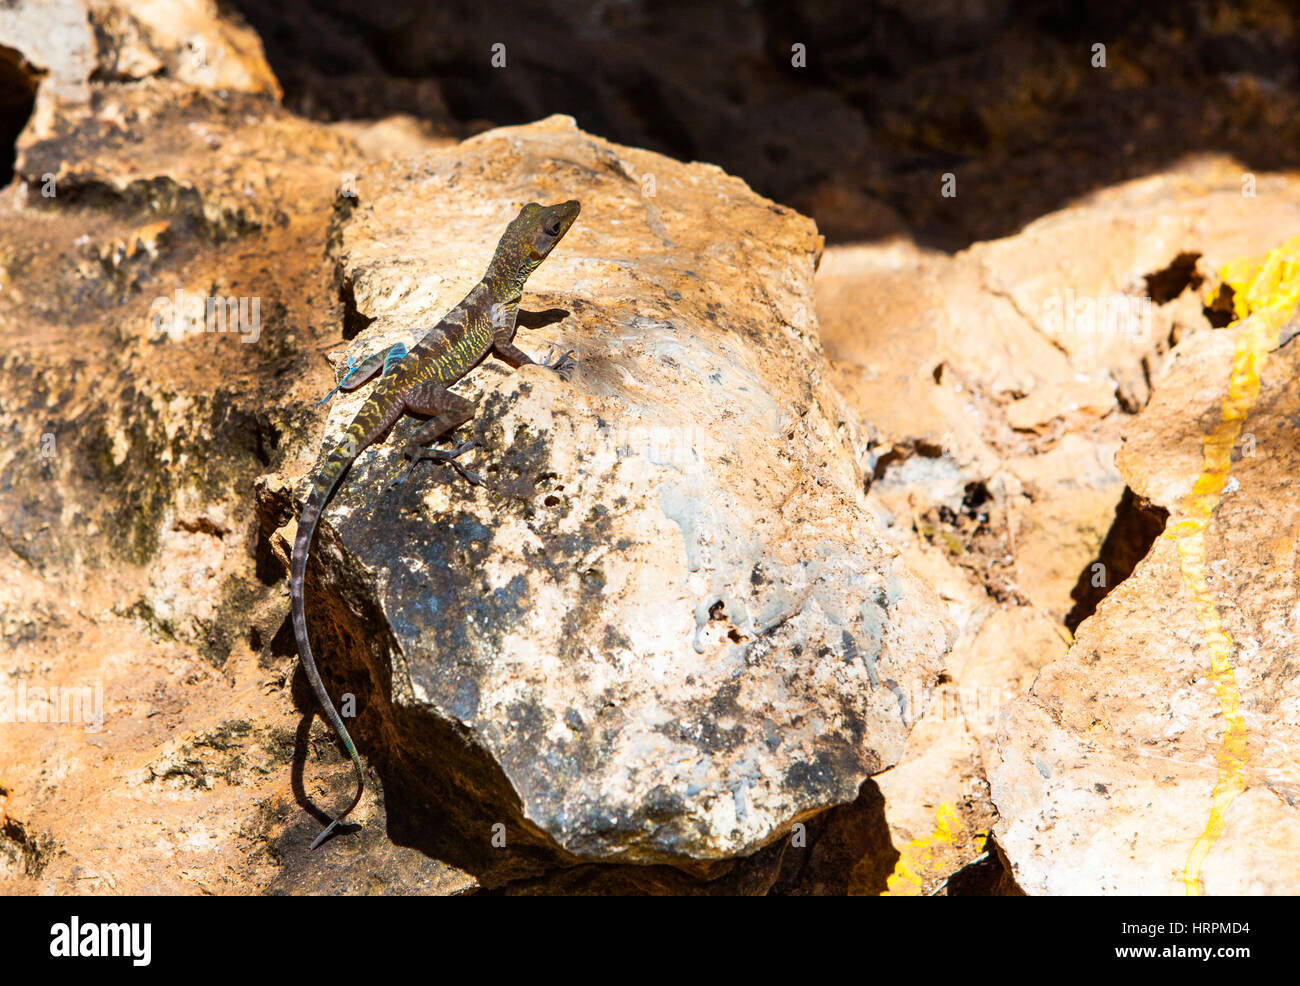 Cuba: Brown lizard on the rock Stock Photo